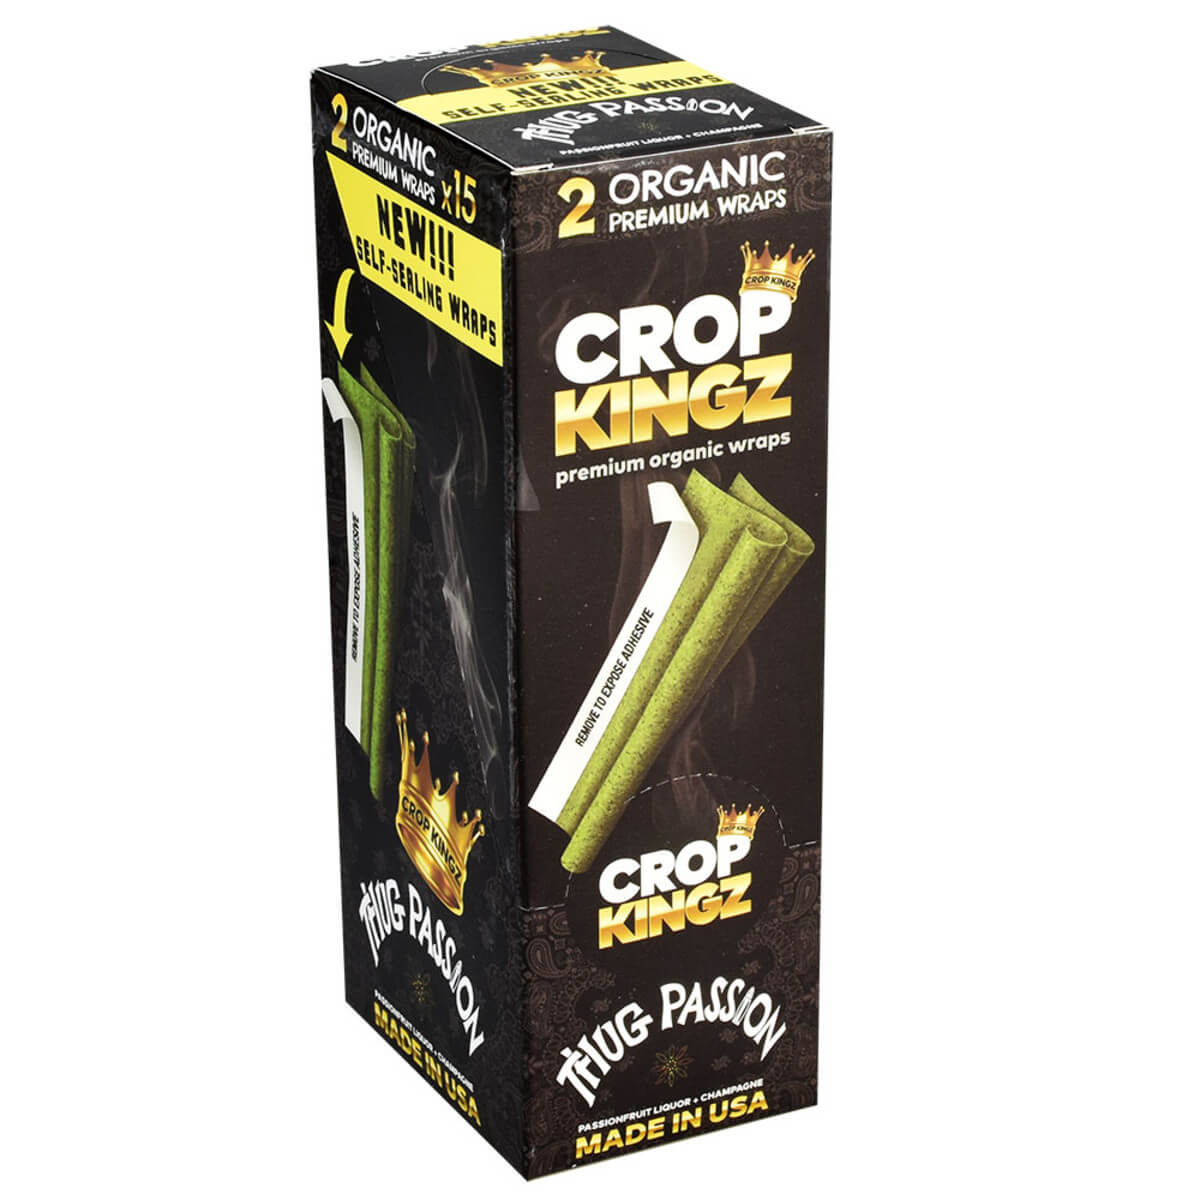 Crop Kingz Organic Hemp Wraps